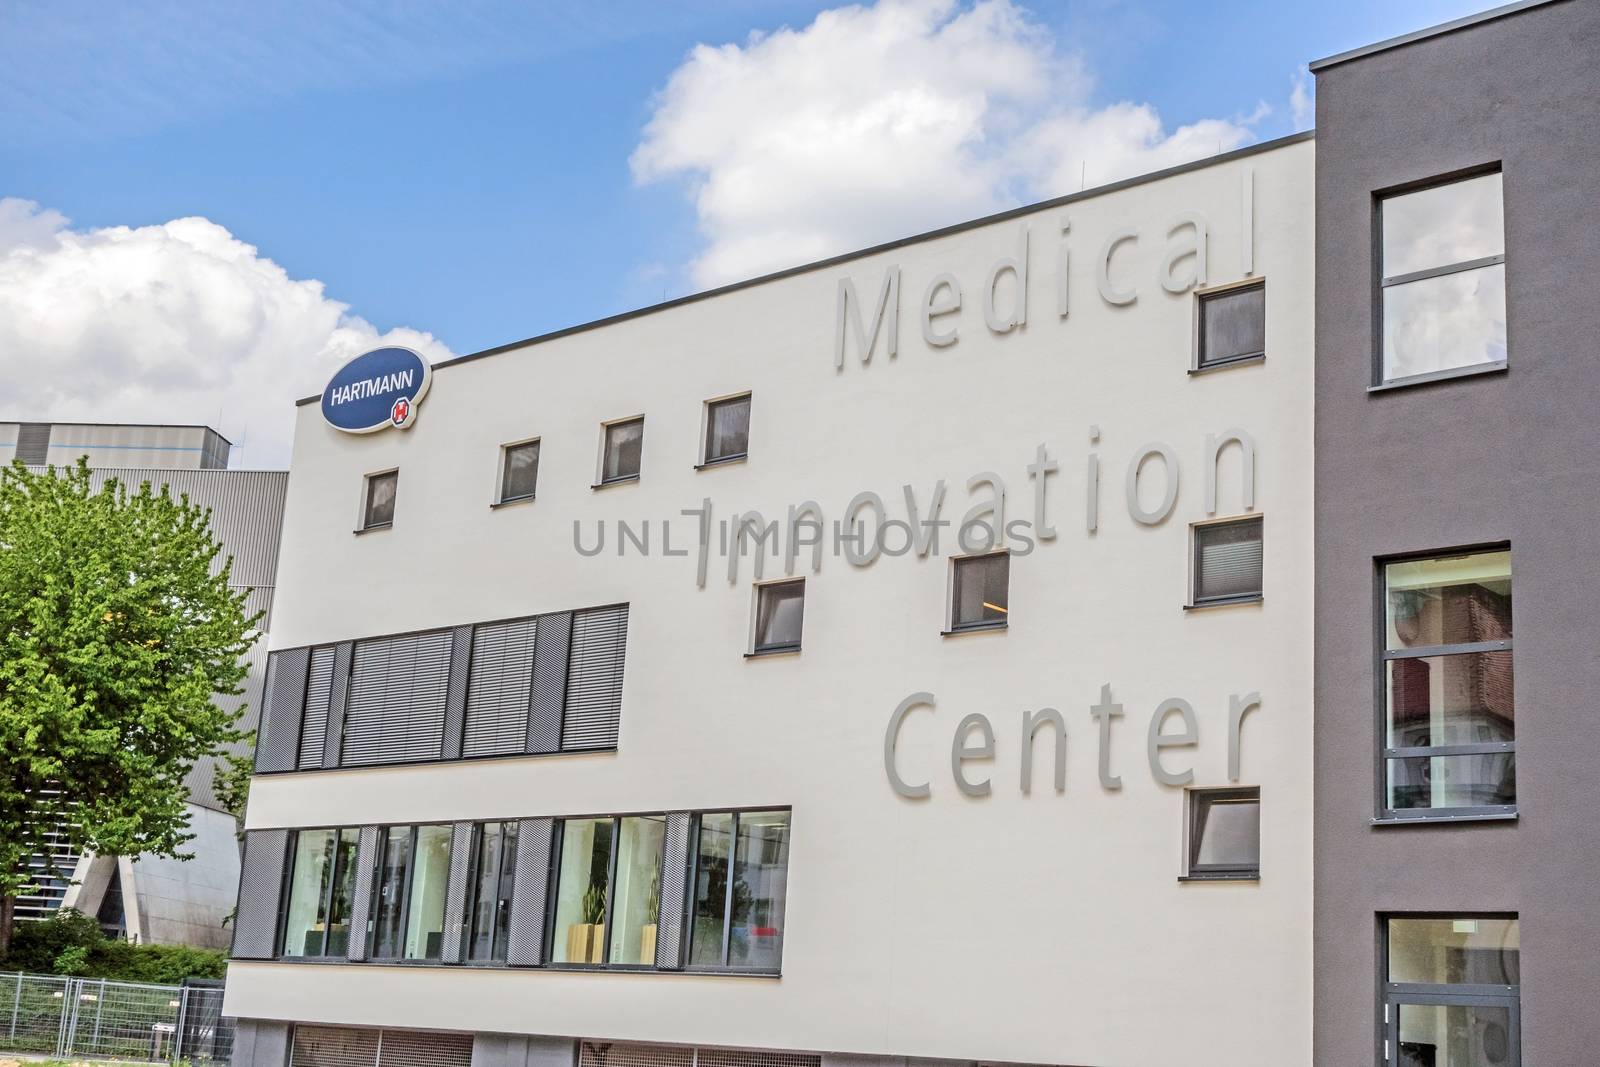 Medical Innovation Center of Hartmann AG, Heidenheim, Germany by aldorado